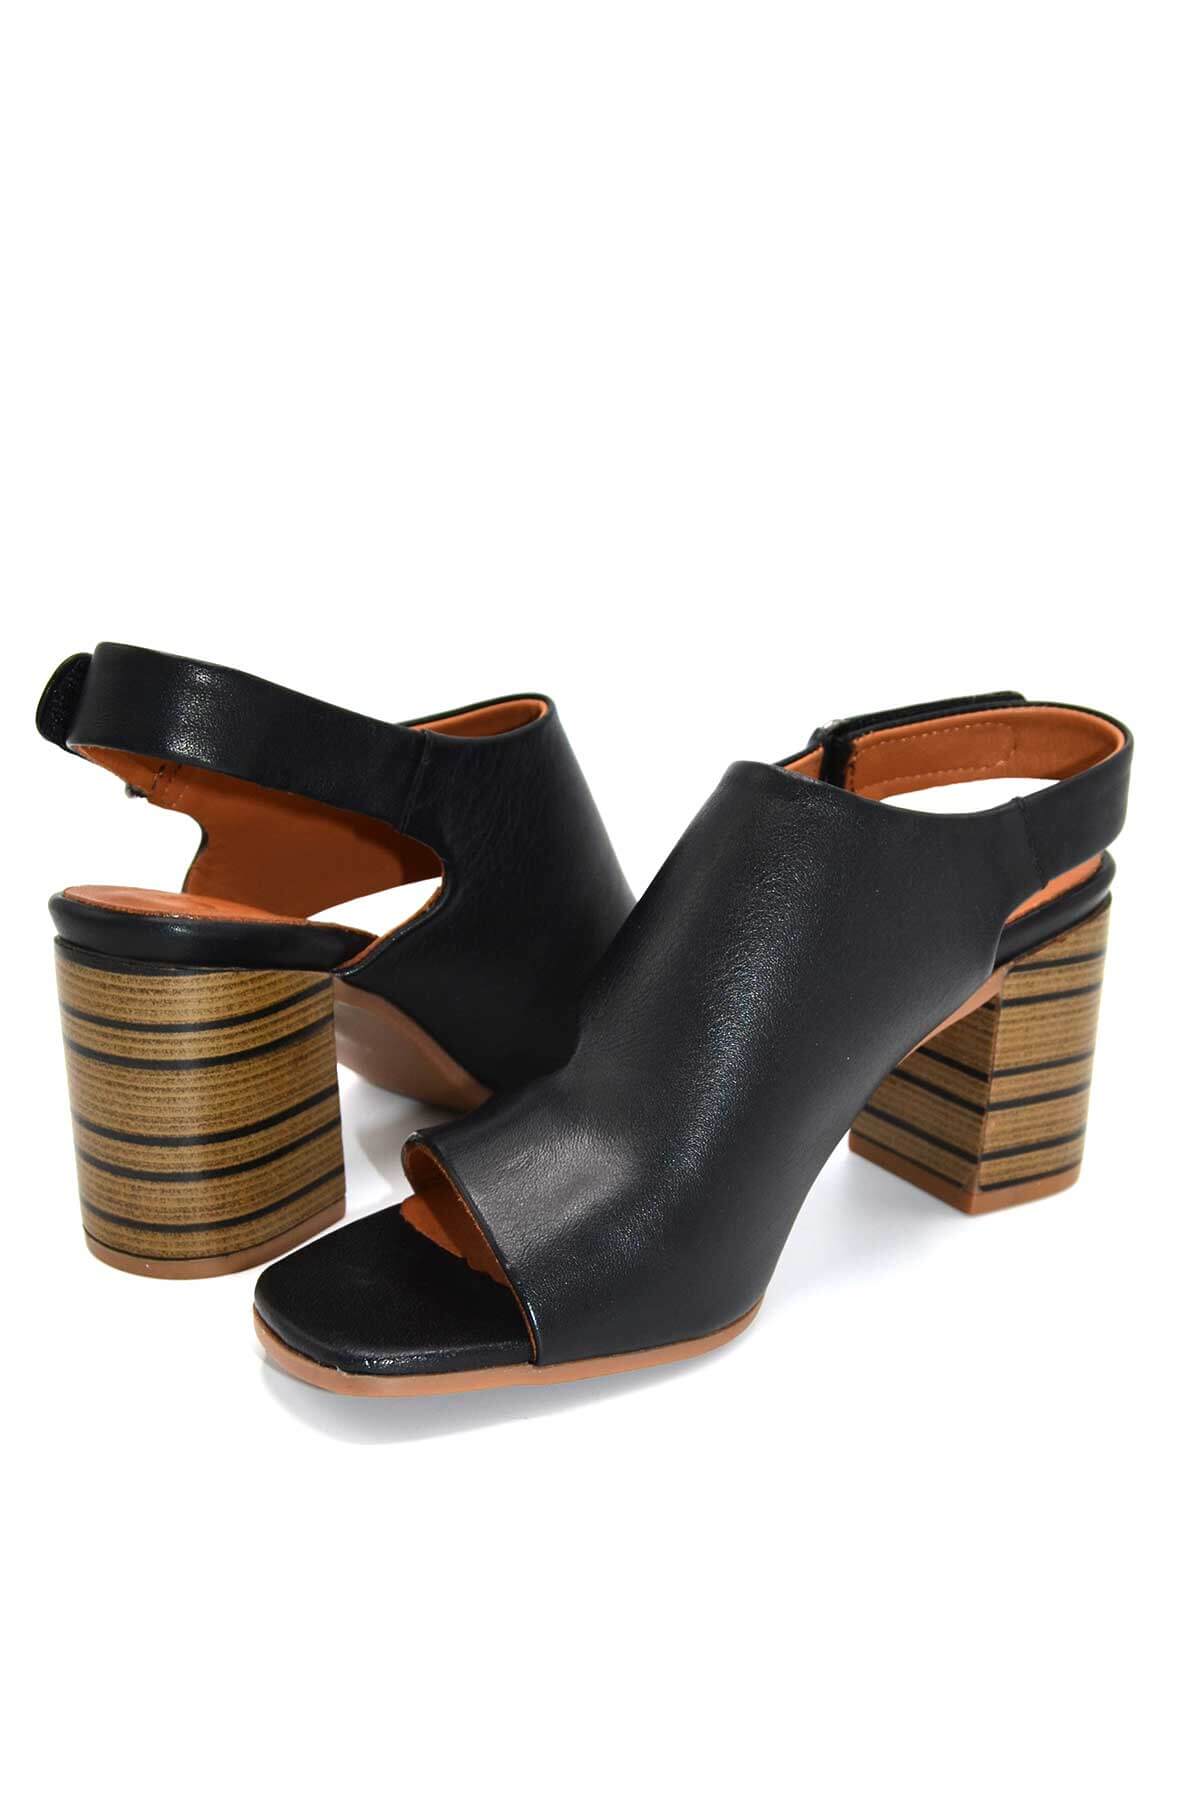 Kadın Topuklu Deri Sandalet Siyah 2108502Y - Thumbnail